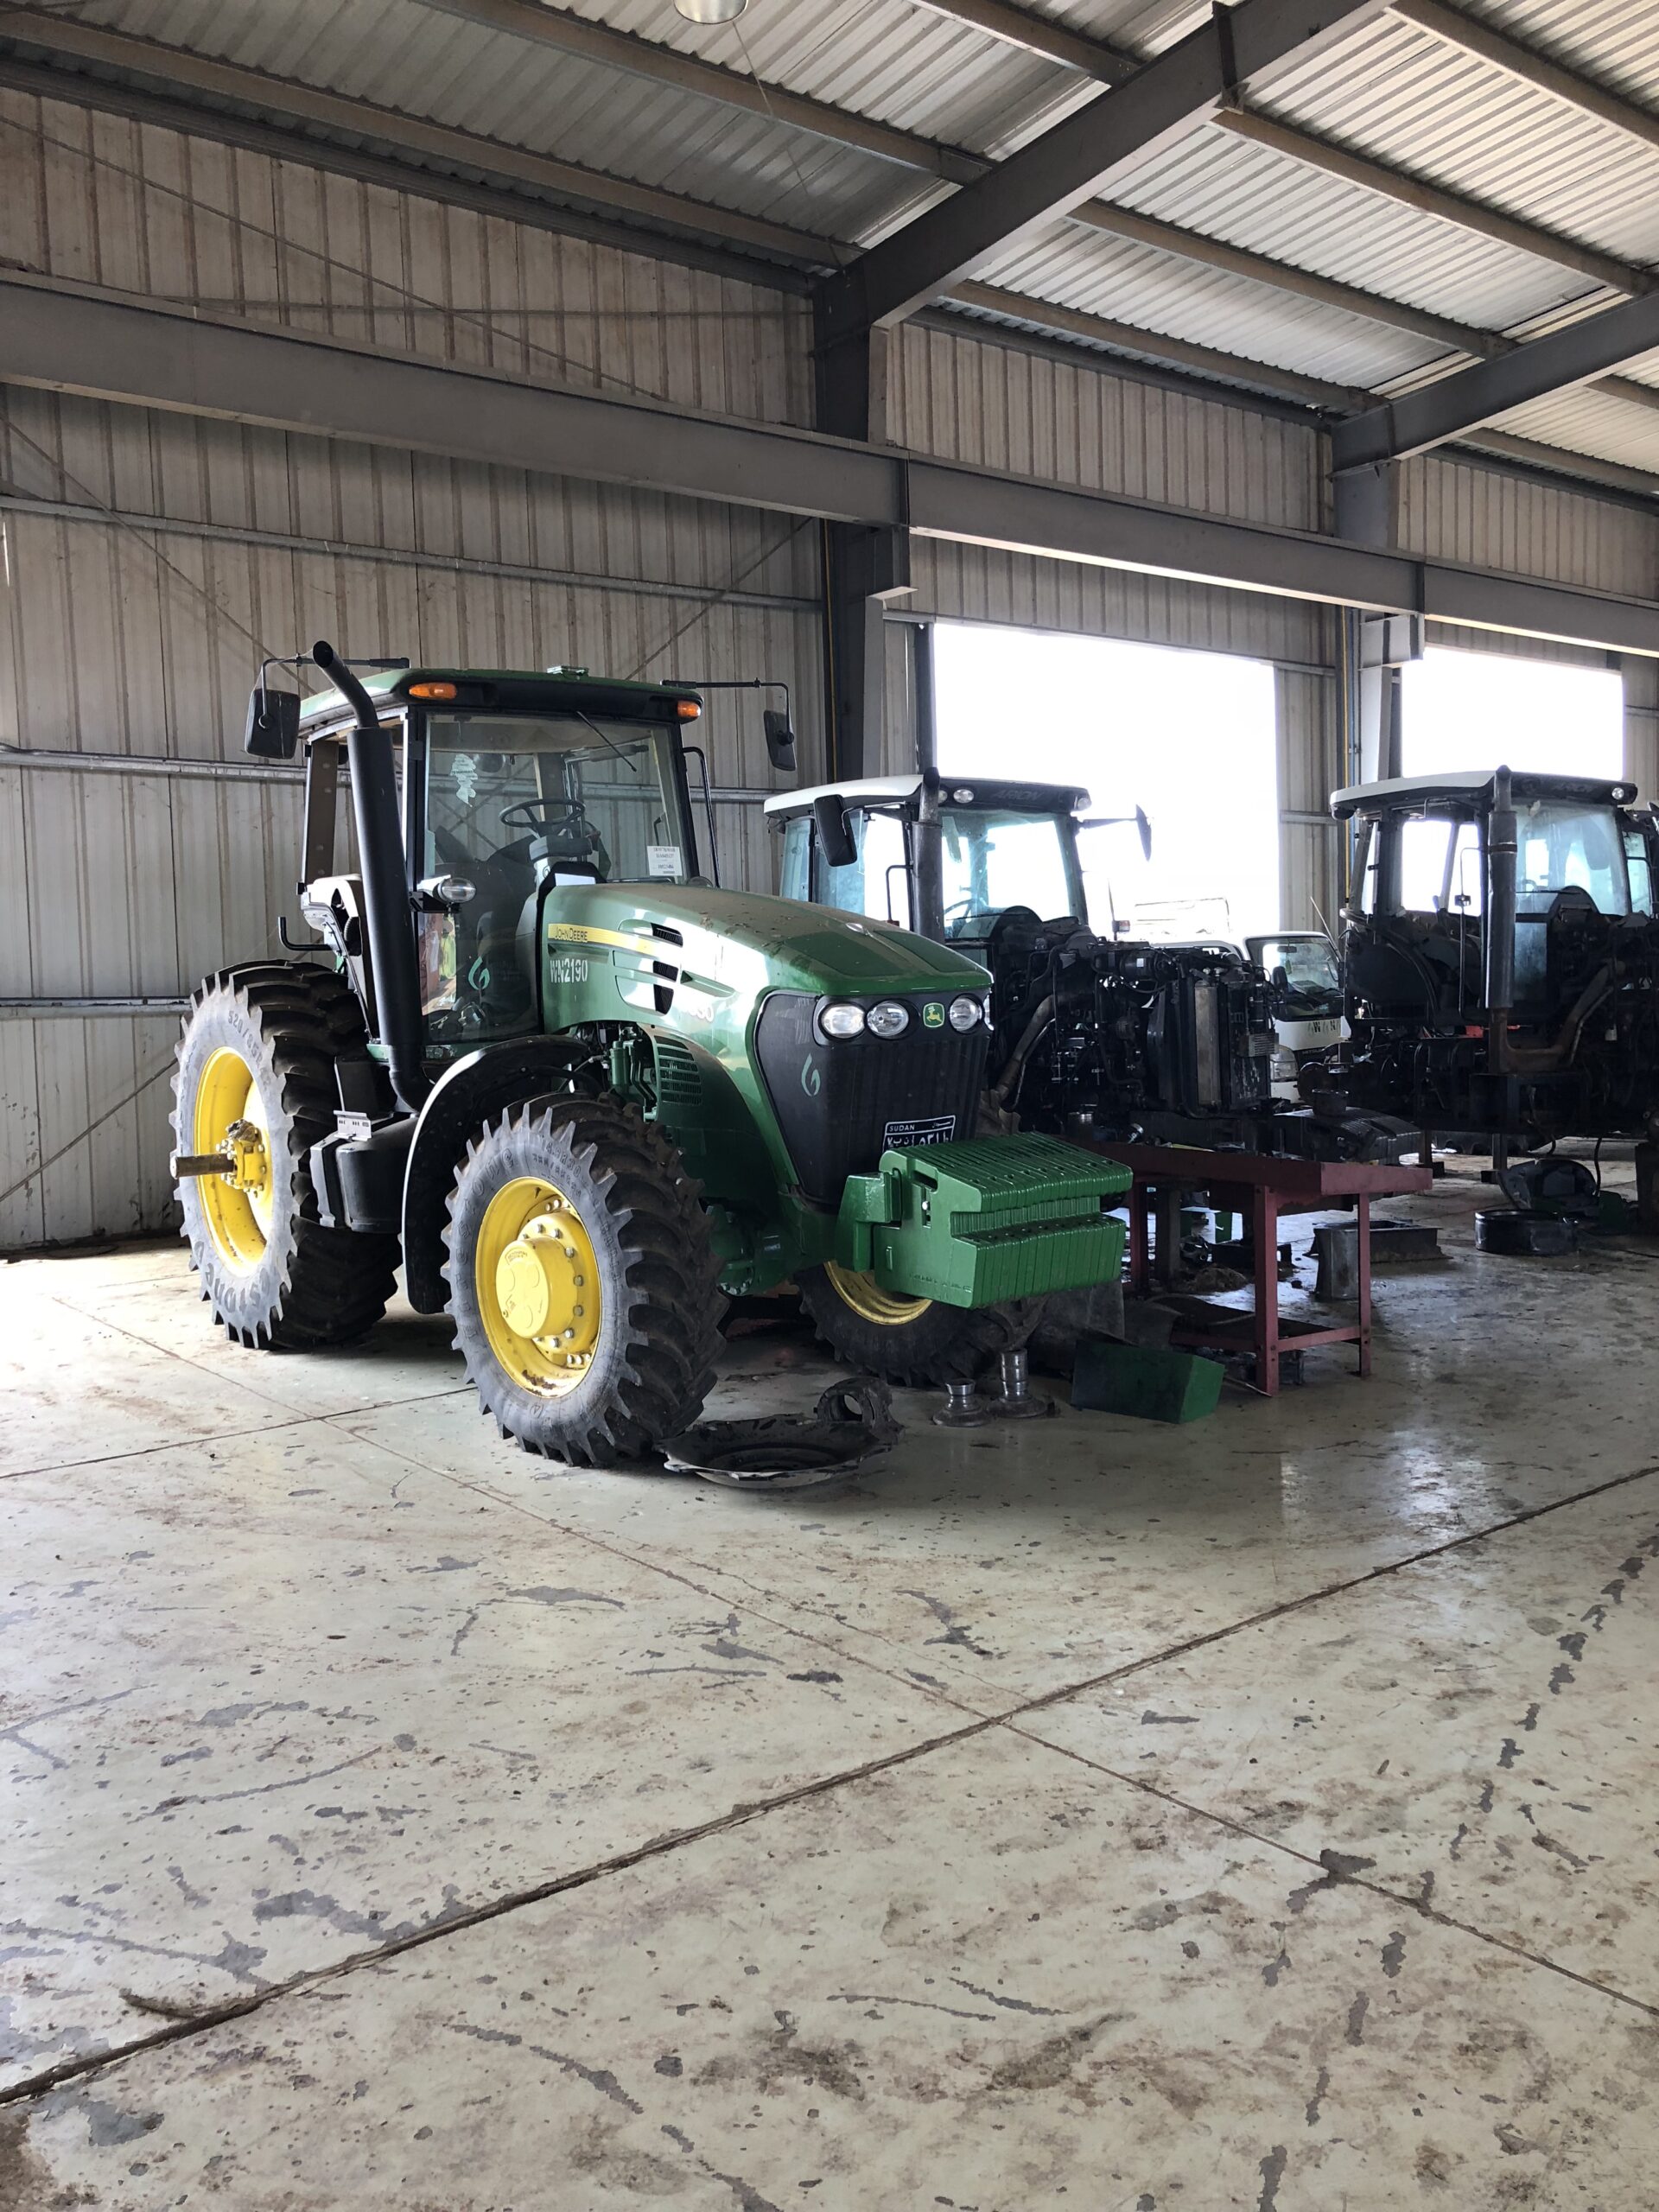 Tanzania: Overhaul and maintenance on tractors